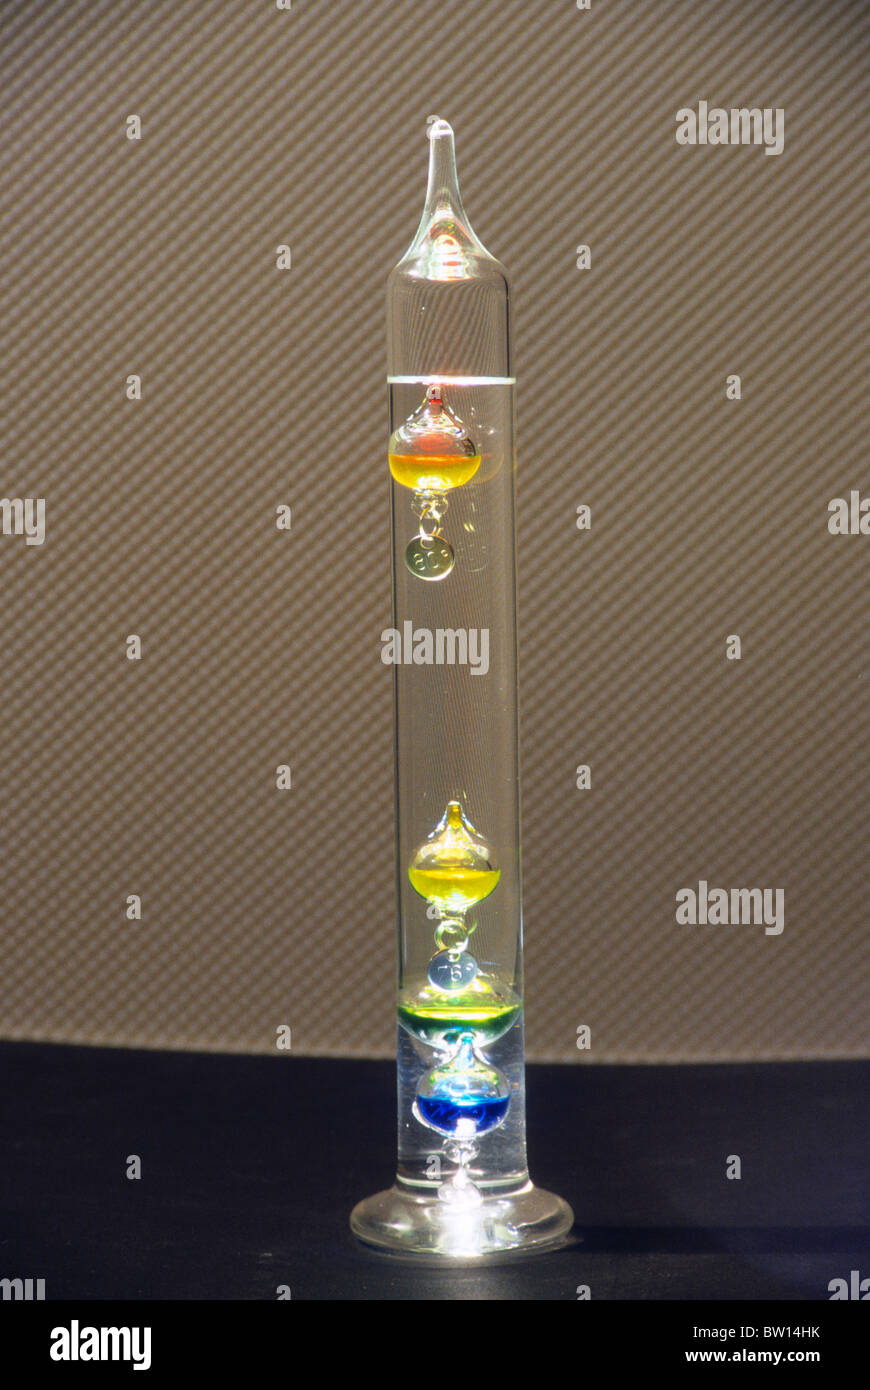 https://c8.alamy.com/comp/BW14HK/galileo-glass-thermometer-science-float-heat-pressure-craft-physics-BW14HK.jpg